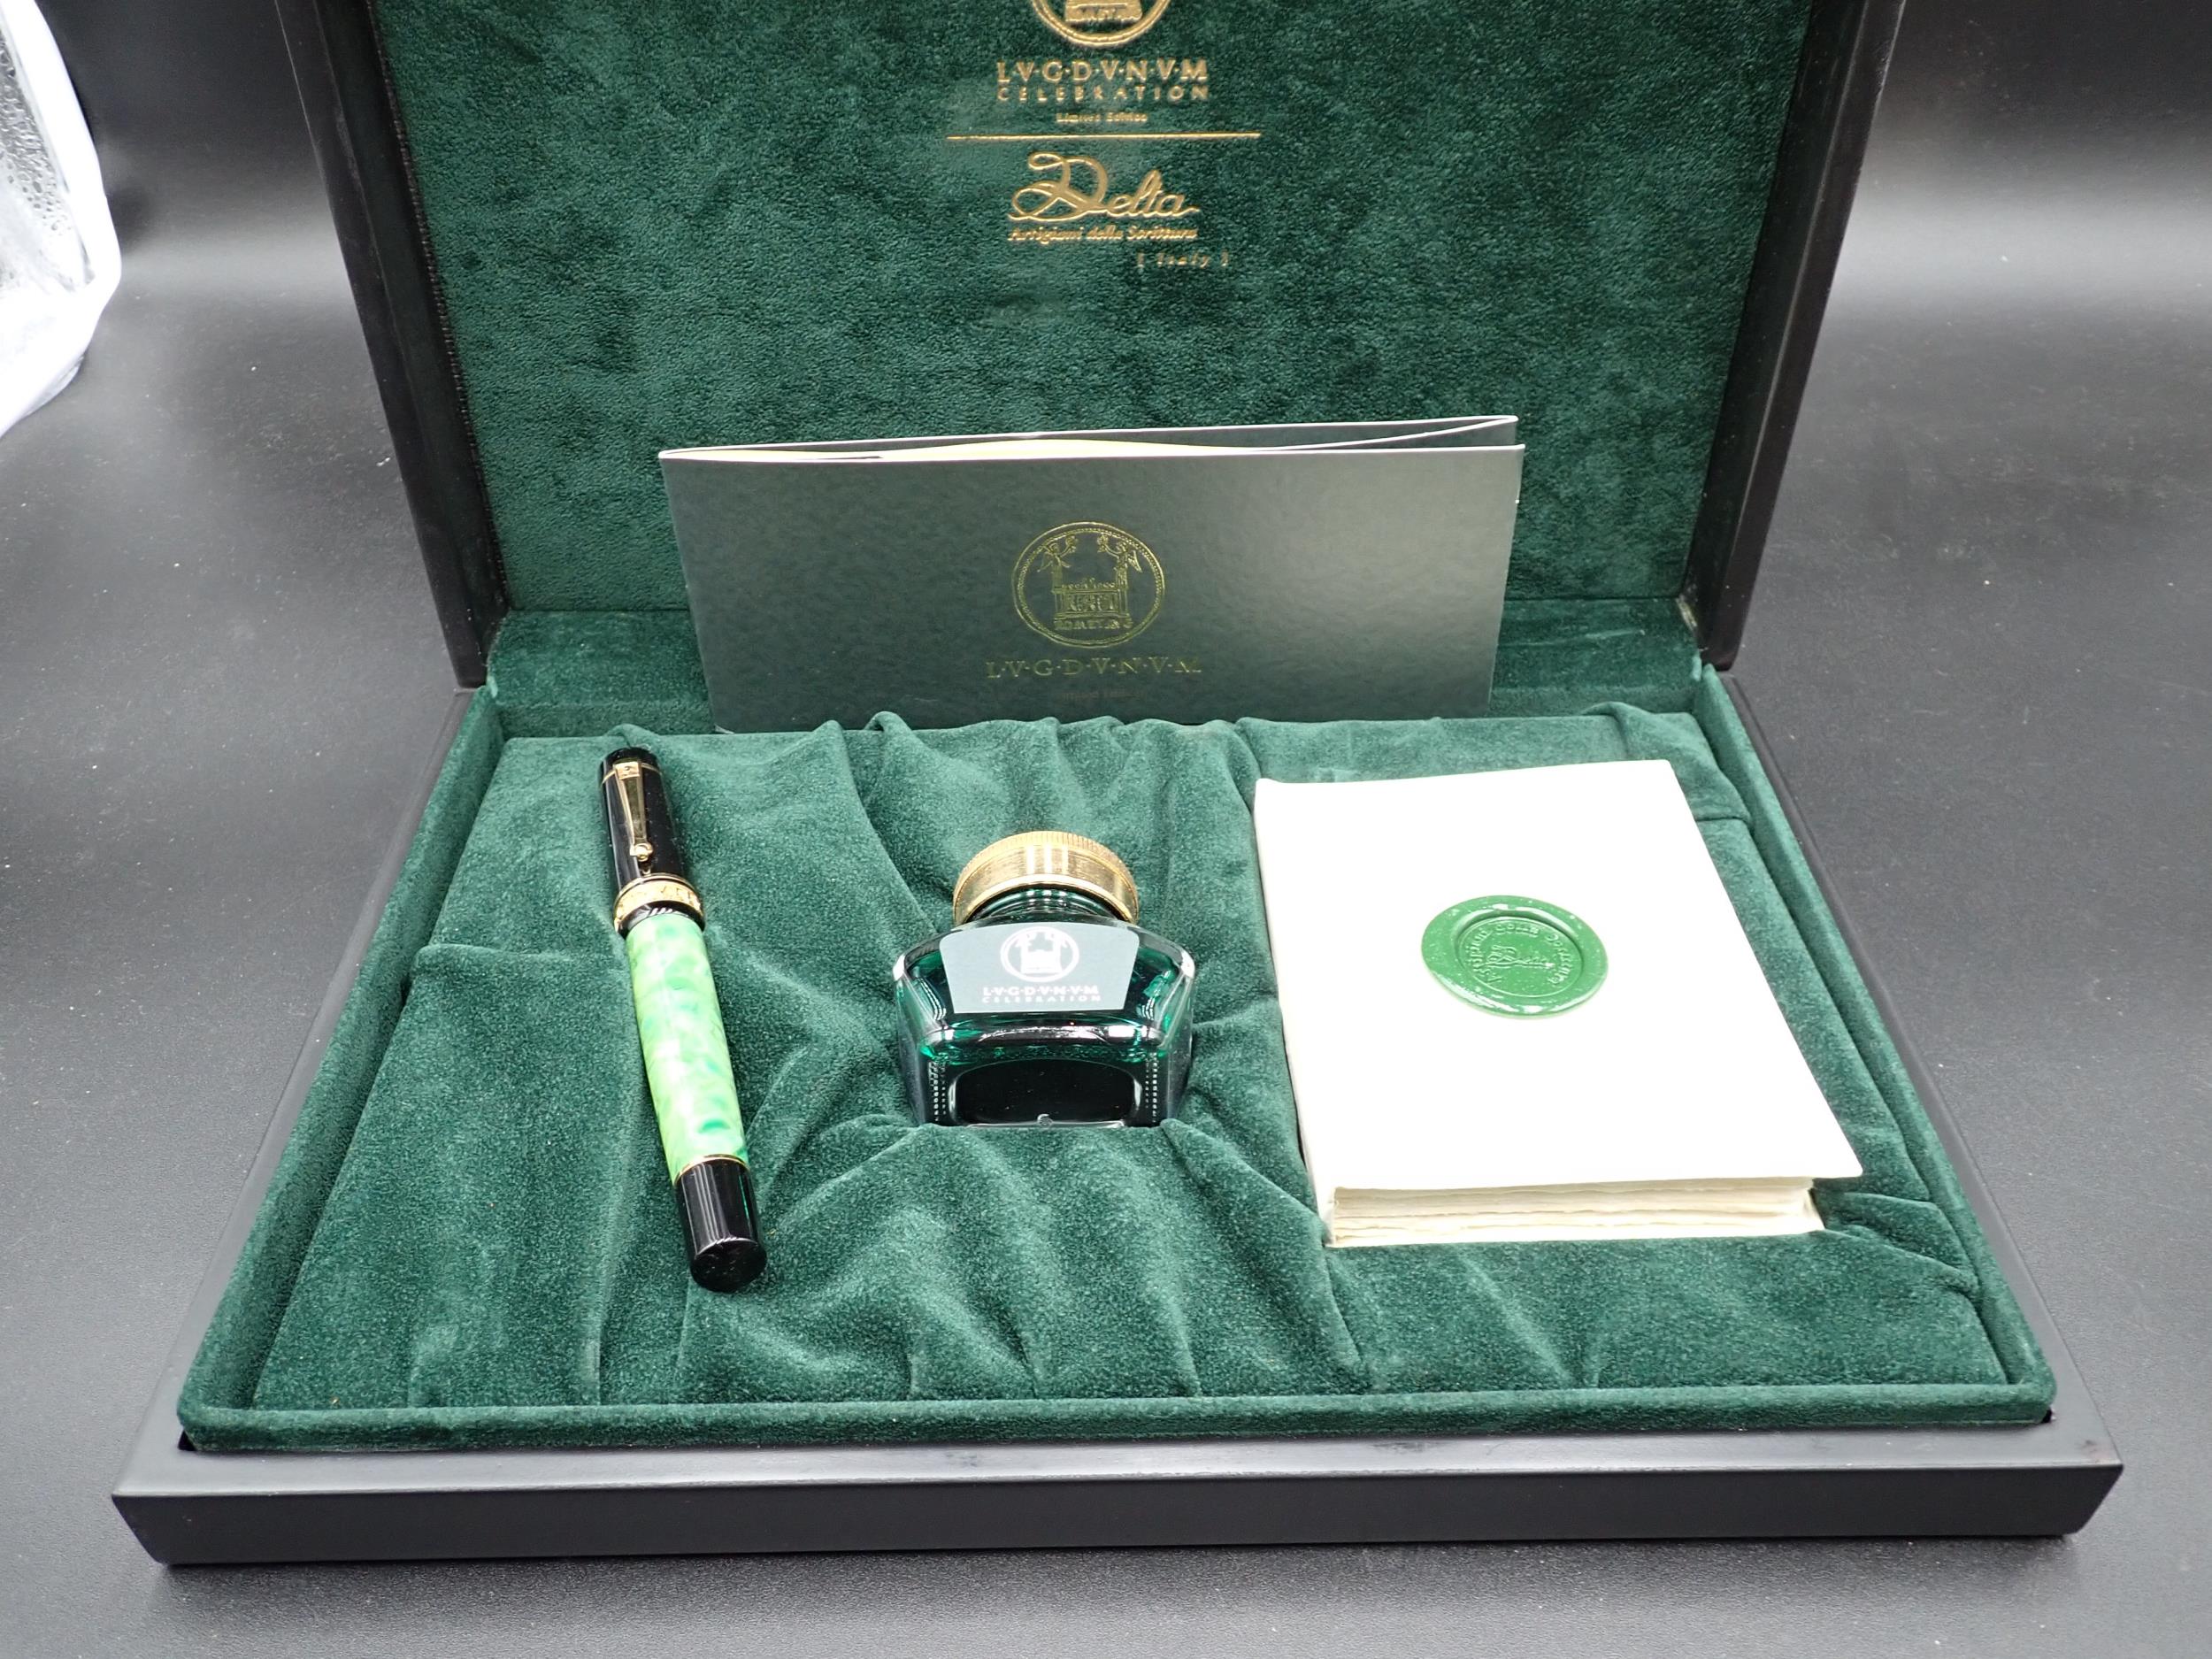 A Delta 'Lugdunum' Fountain Pen, 72/98, green marble case with black cap, 18k nib, in box